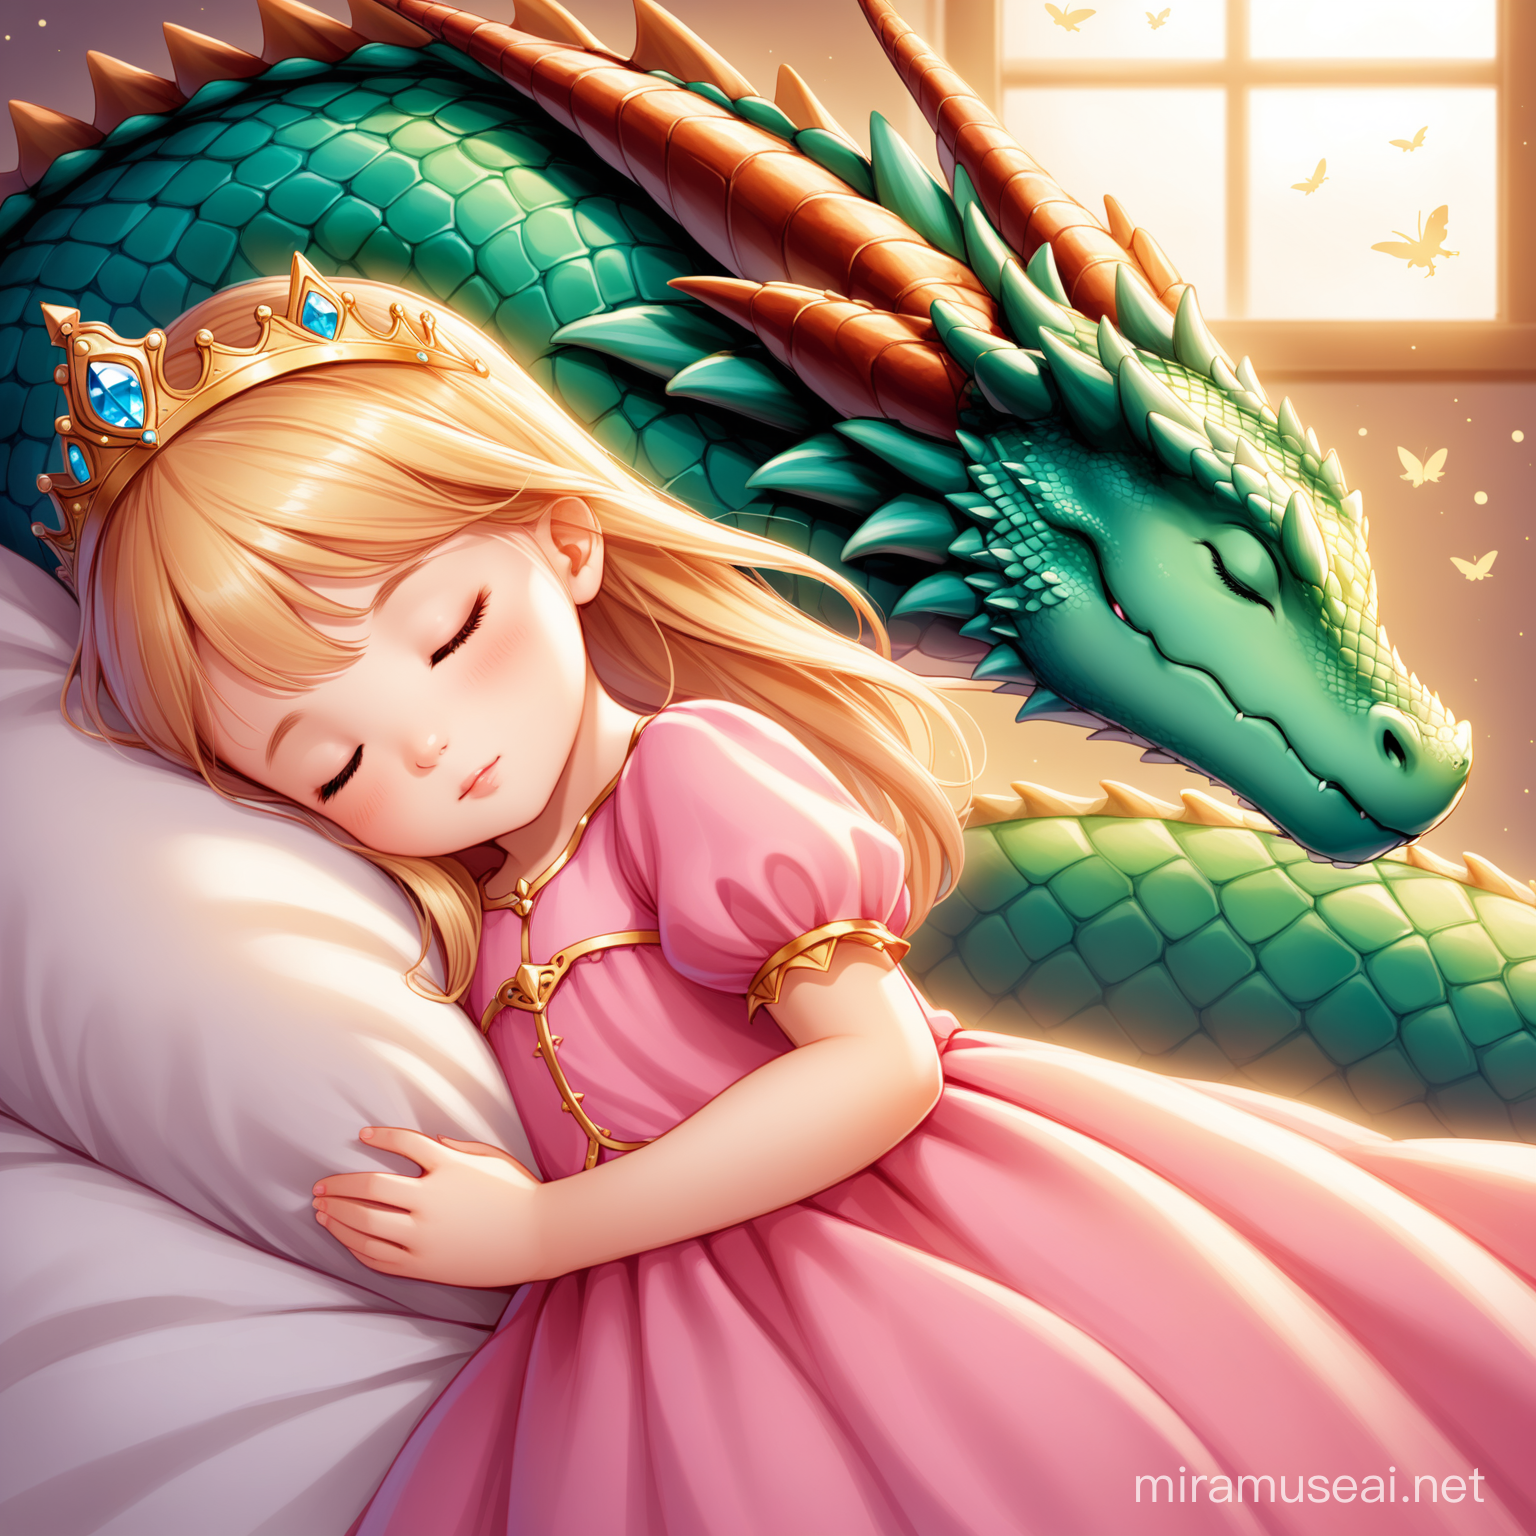 Adorable Little Princess Sleeping with Her Dragon